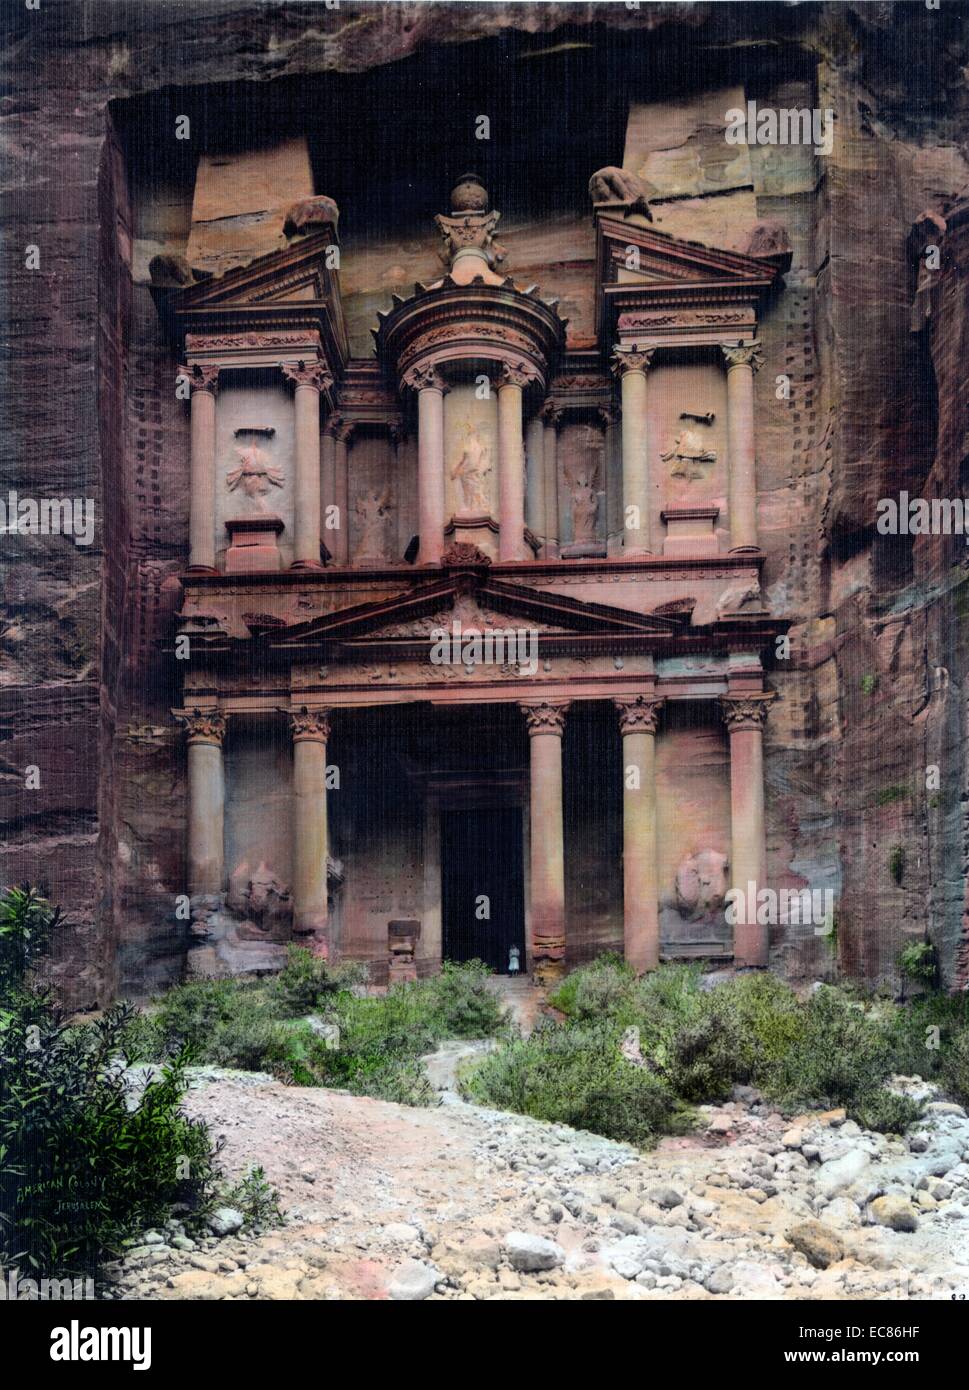 Farbfoto der Tempel El-Khazneh innerhalb der zerstörten Stadt Petra in Jordanien. Datierte 1950 Stockfoto